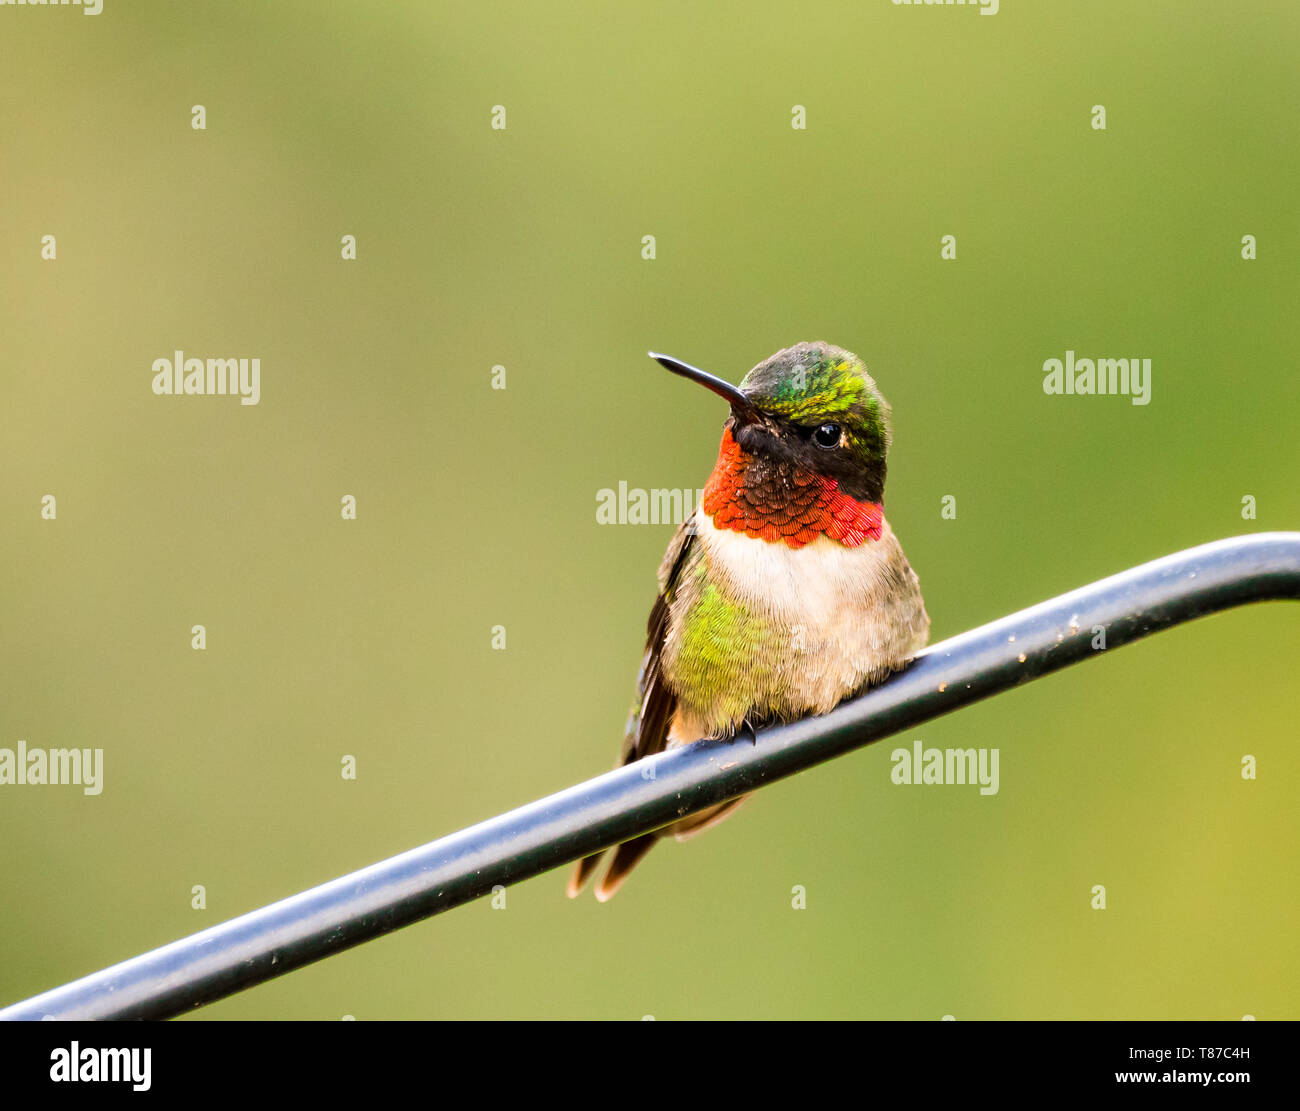 Male Ruby-Throated Hummingbird sitting on metal pole. Stock Photo